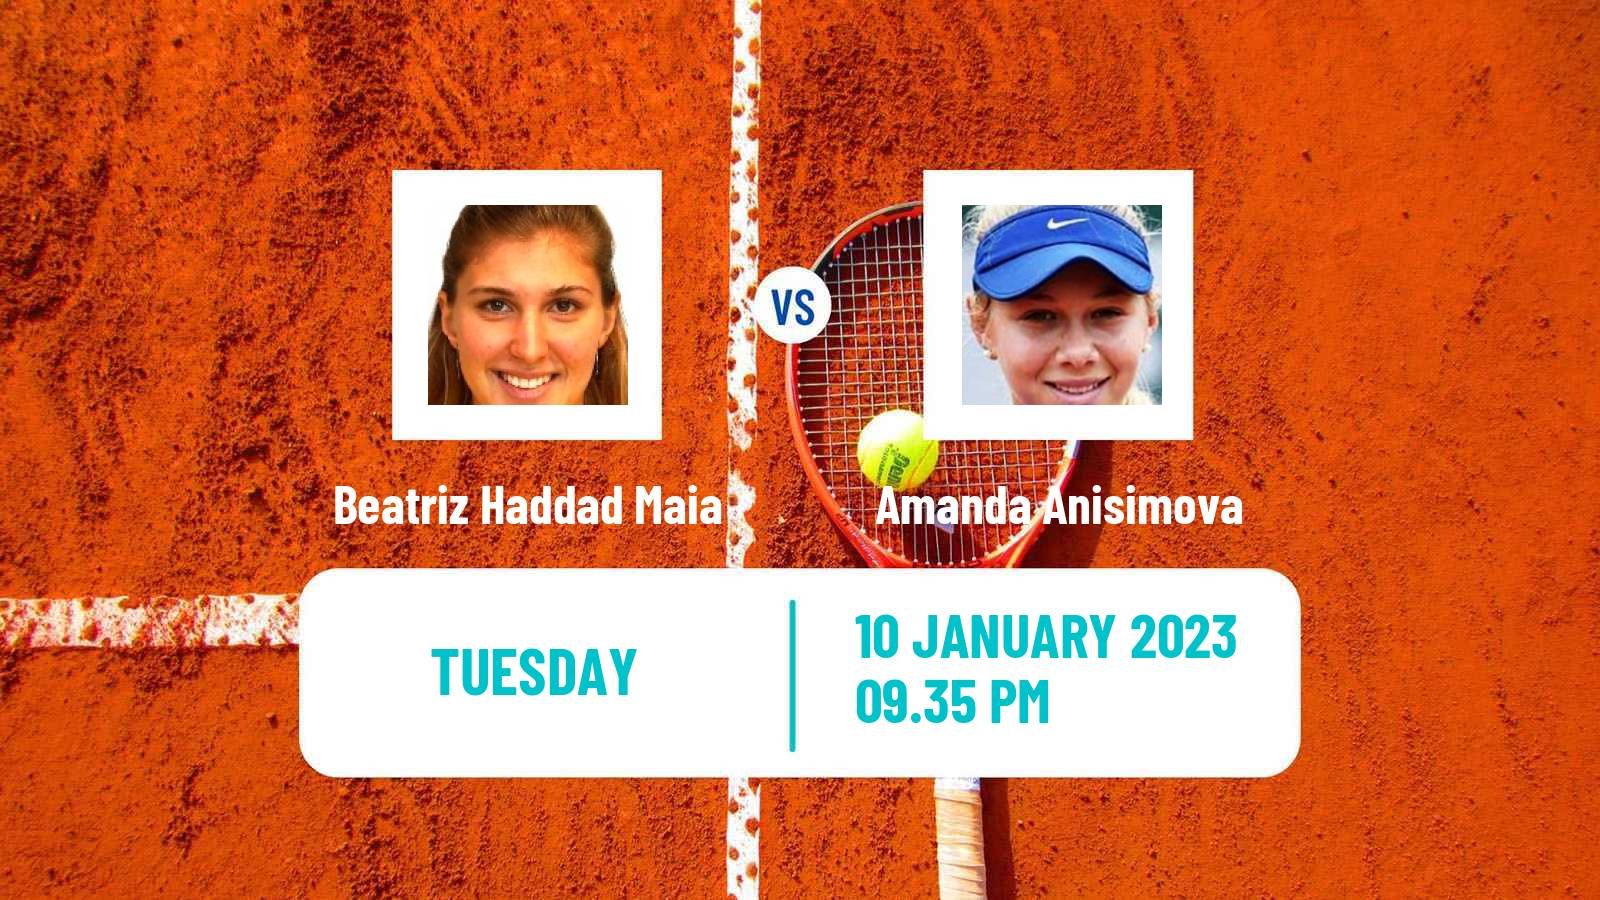 Tennis WTA Adelaide 2 Beatriz Haddad Maia - Amanda Anisimova